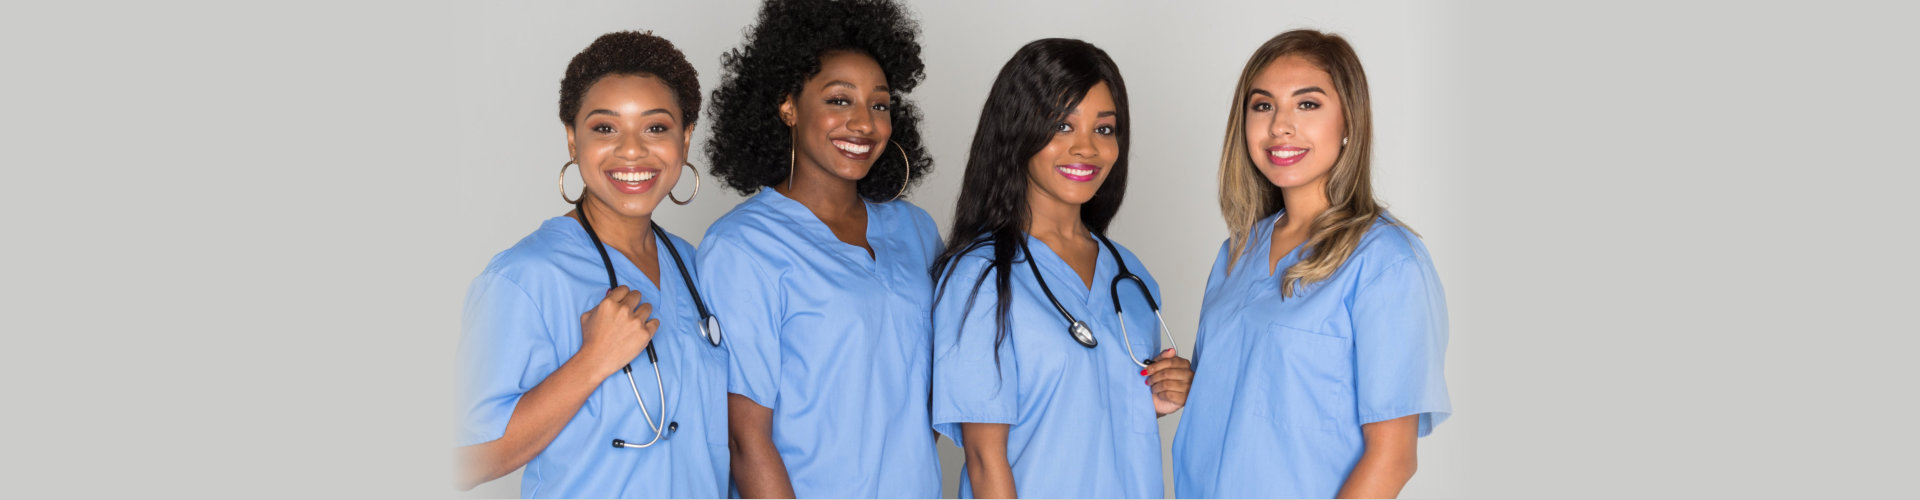 Large group of female nurses working together